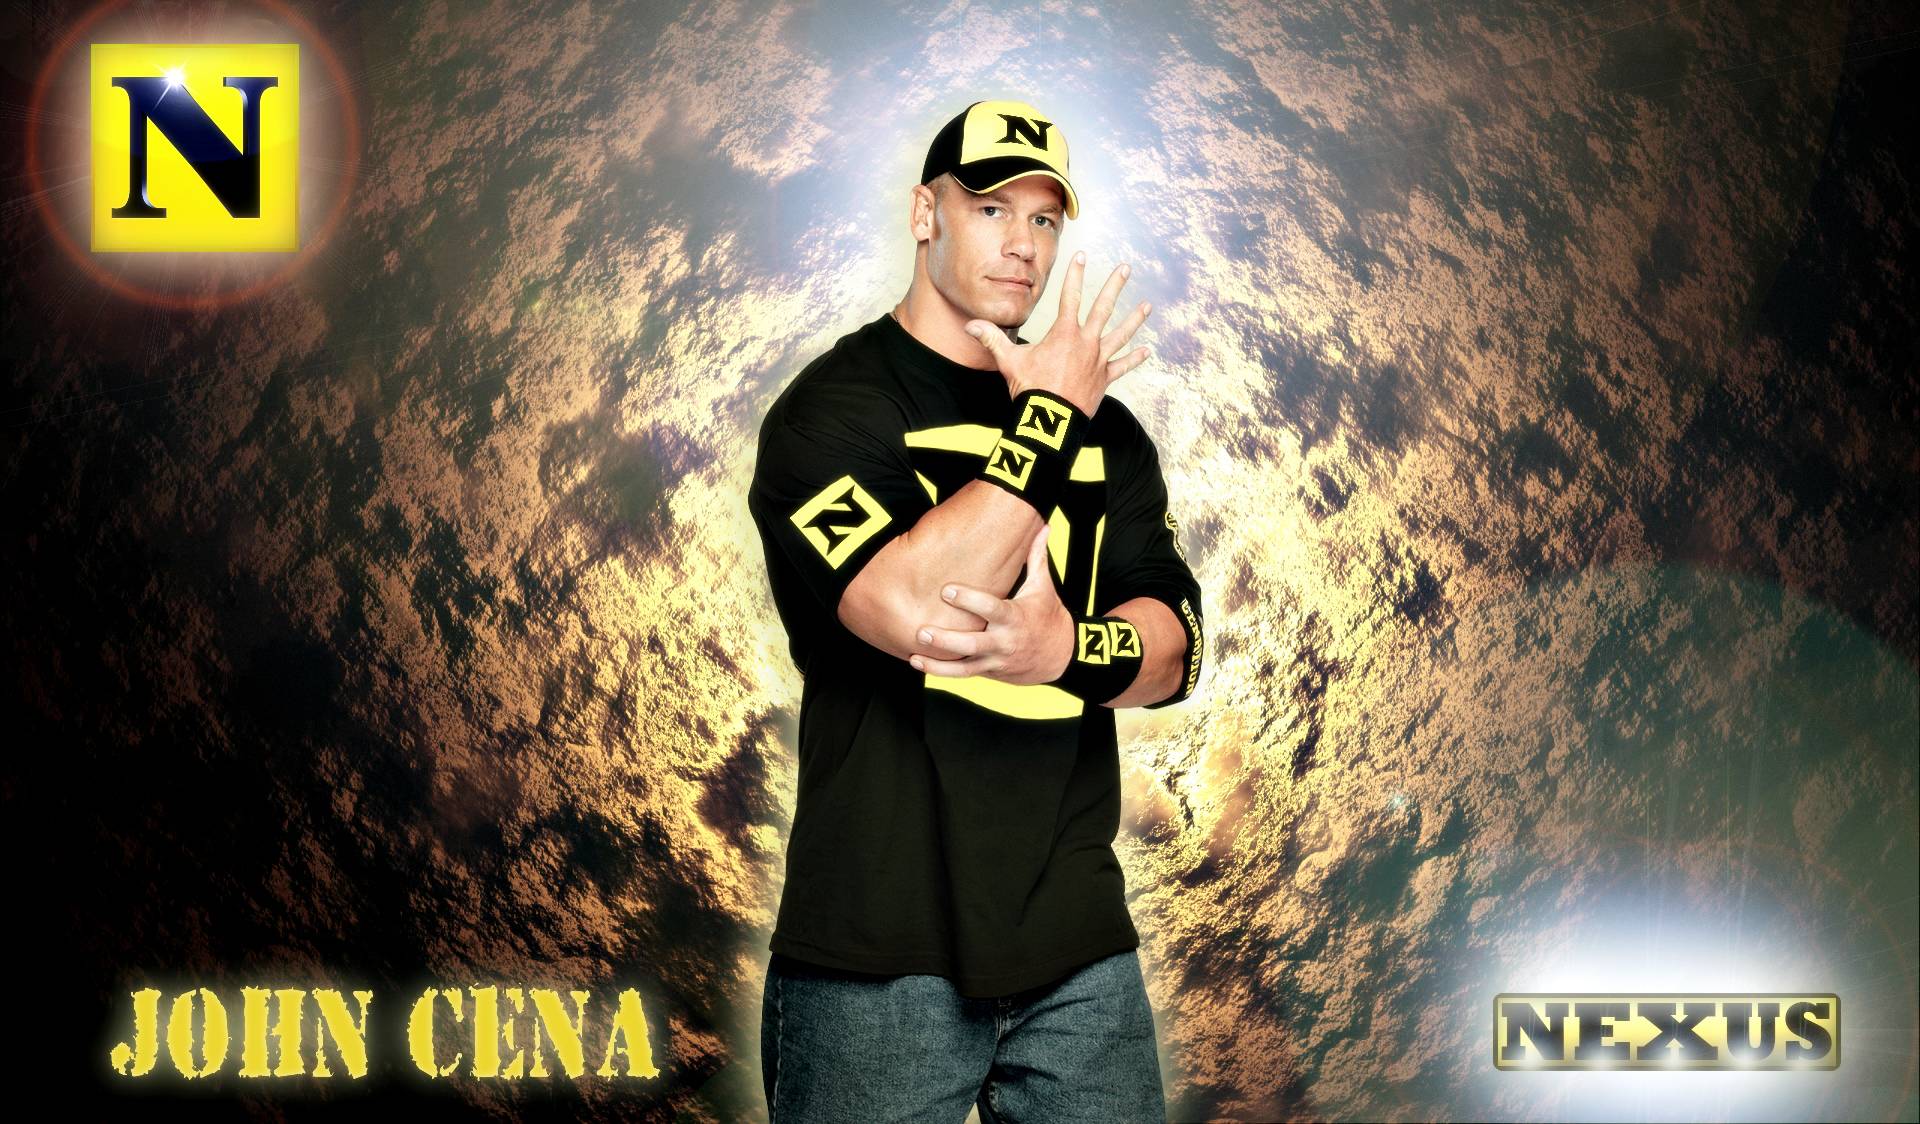 John Cena Widescreen Image 06. hdwallpaper